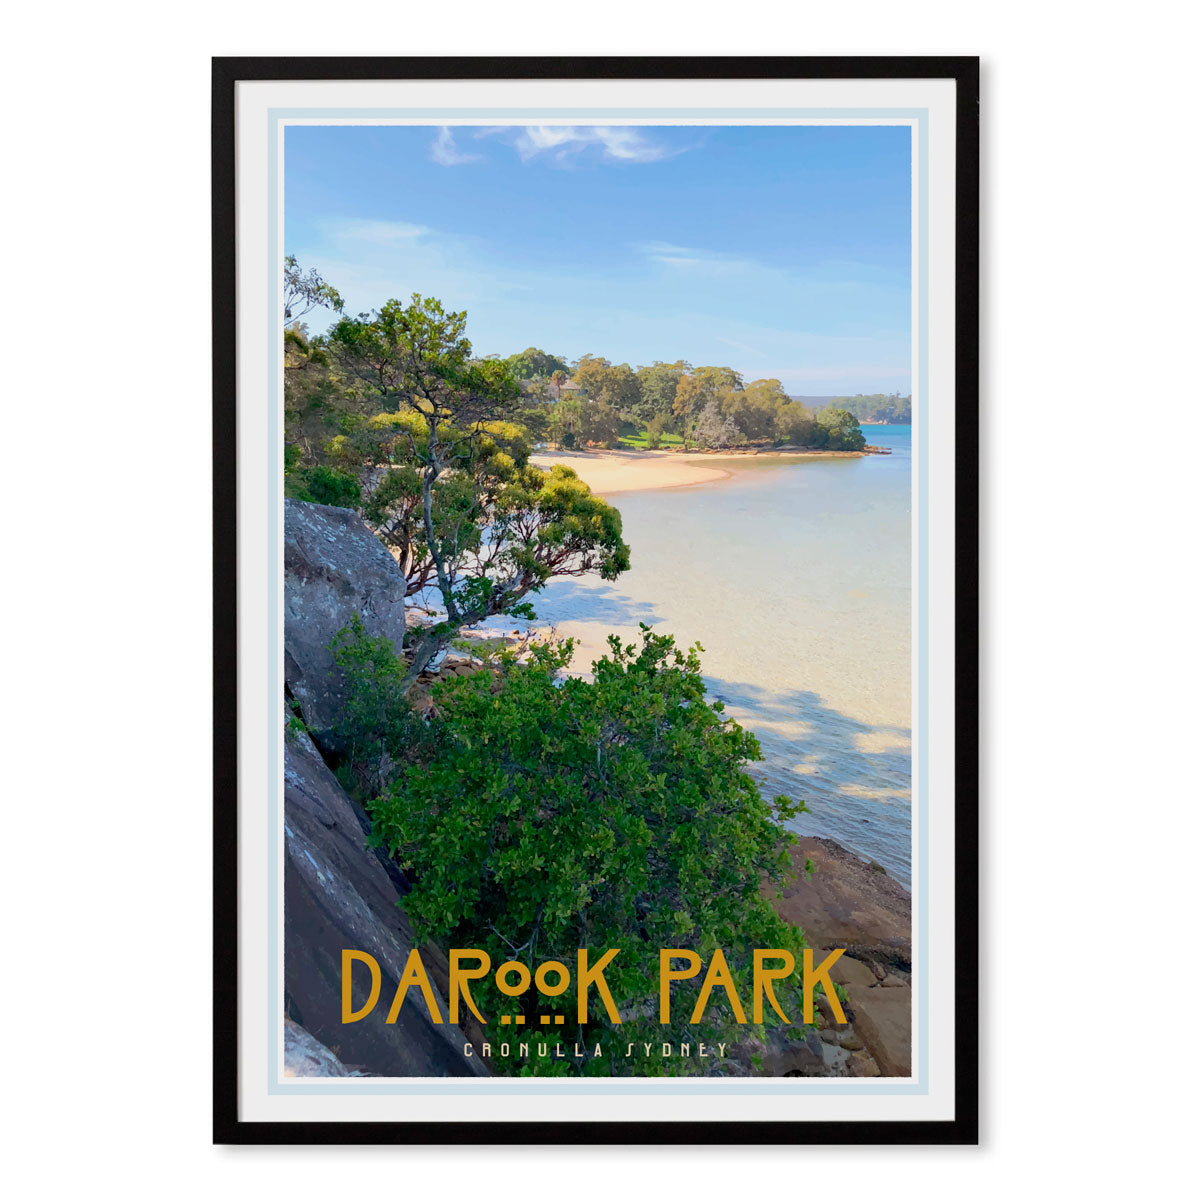 Darook Park Cronulla, vintage style travel print places we luv